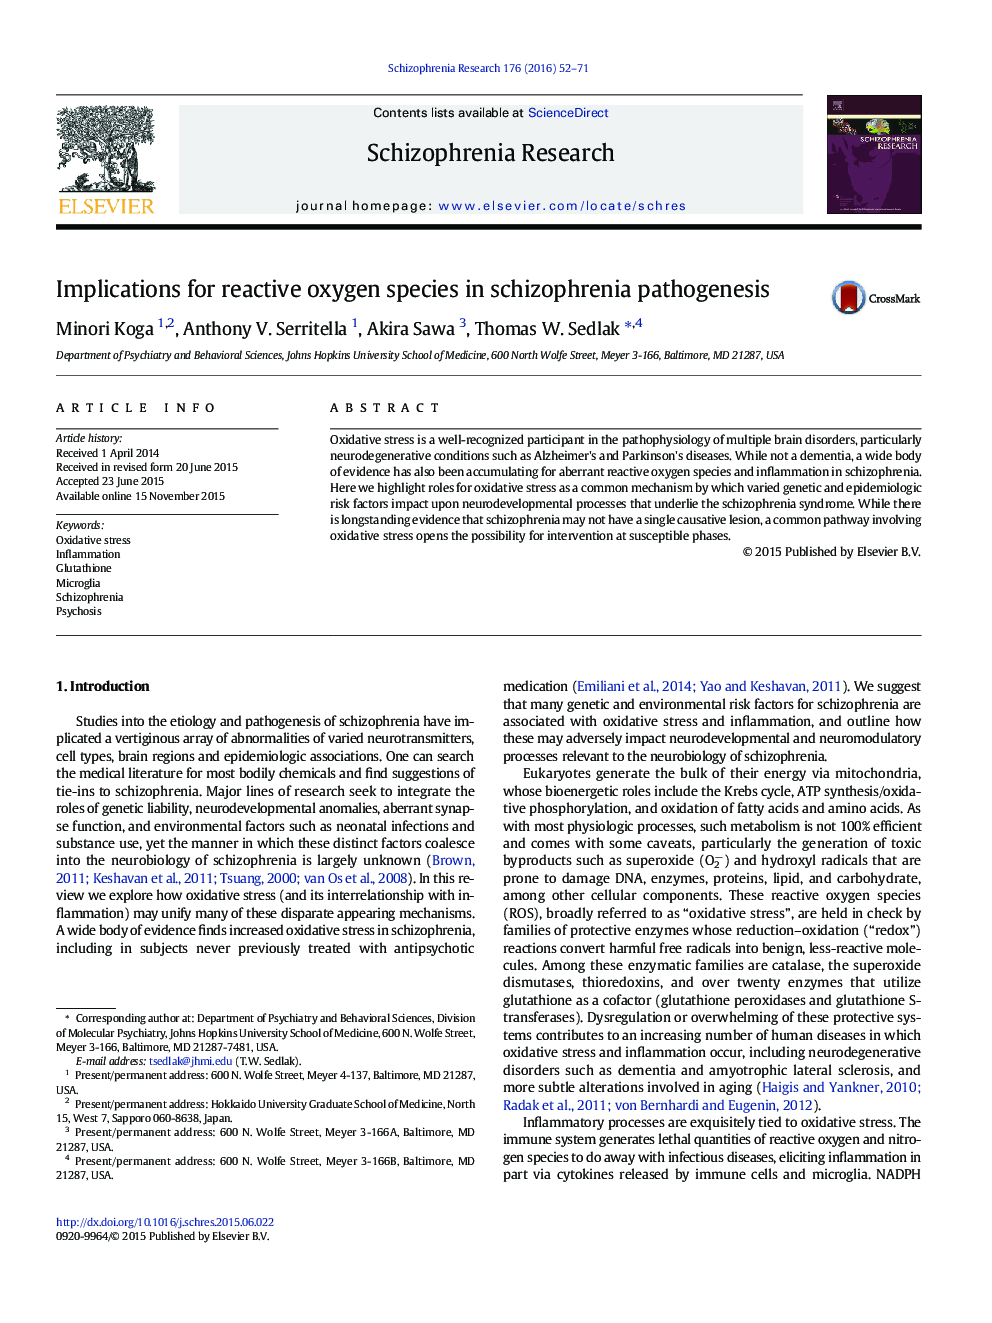 Implications for reactive oxygen species in schizophrenia pathogenesis